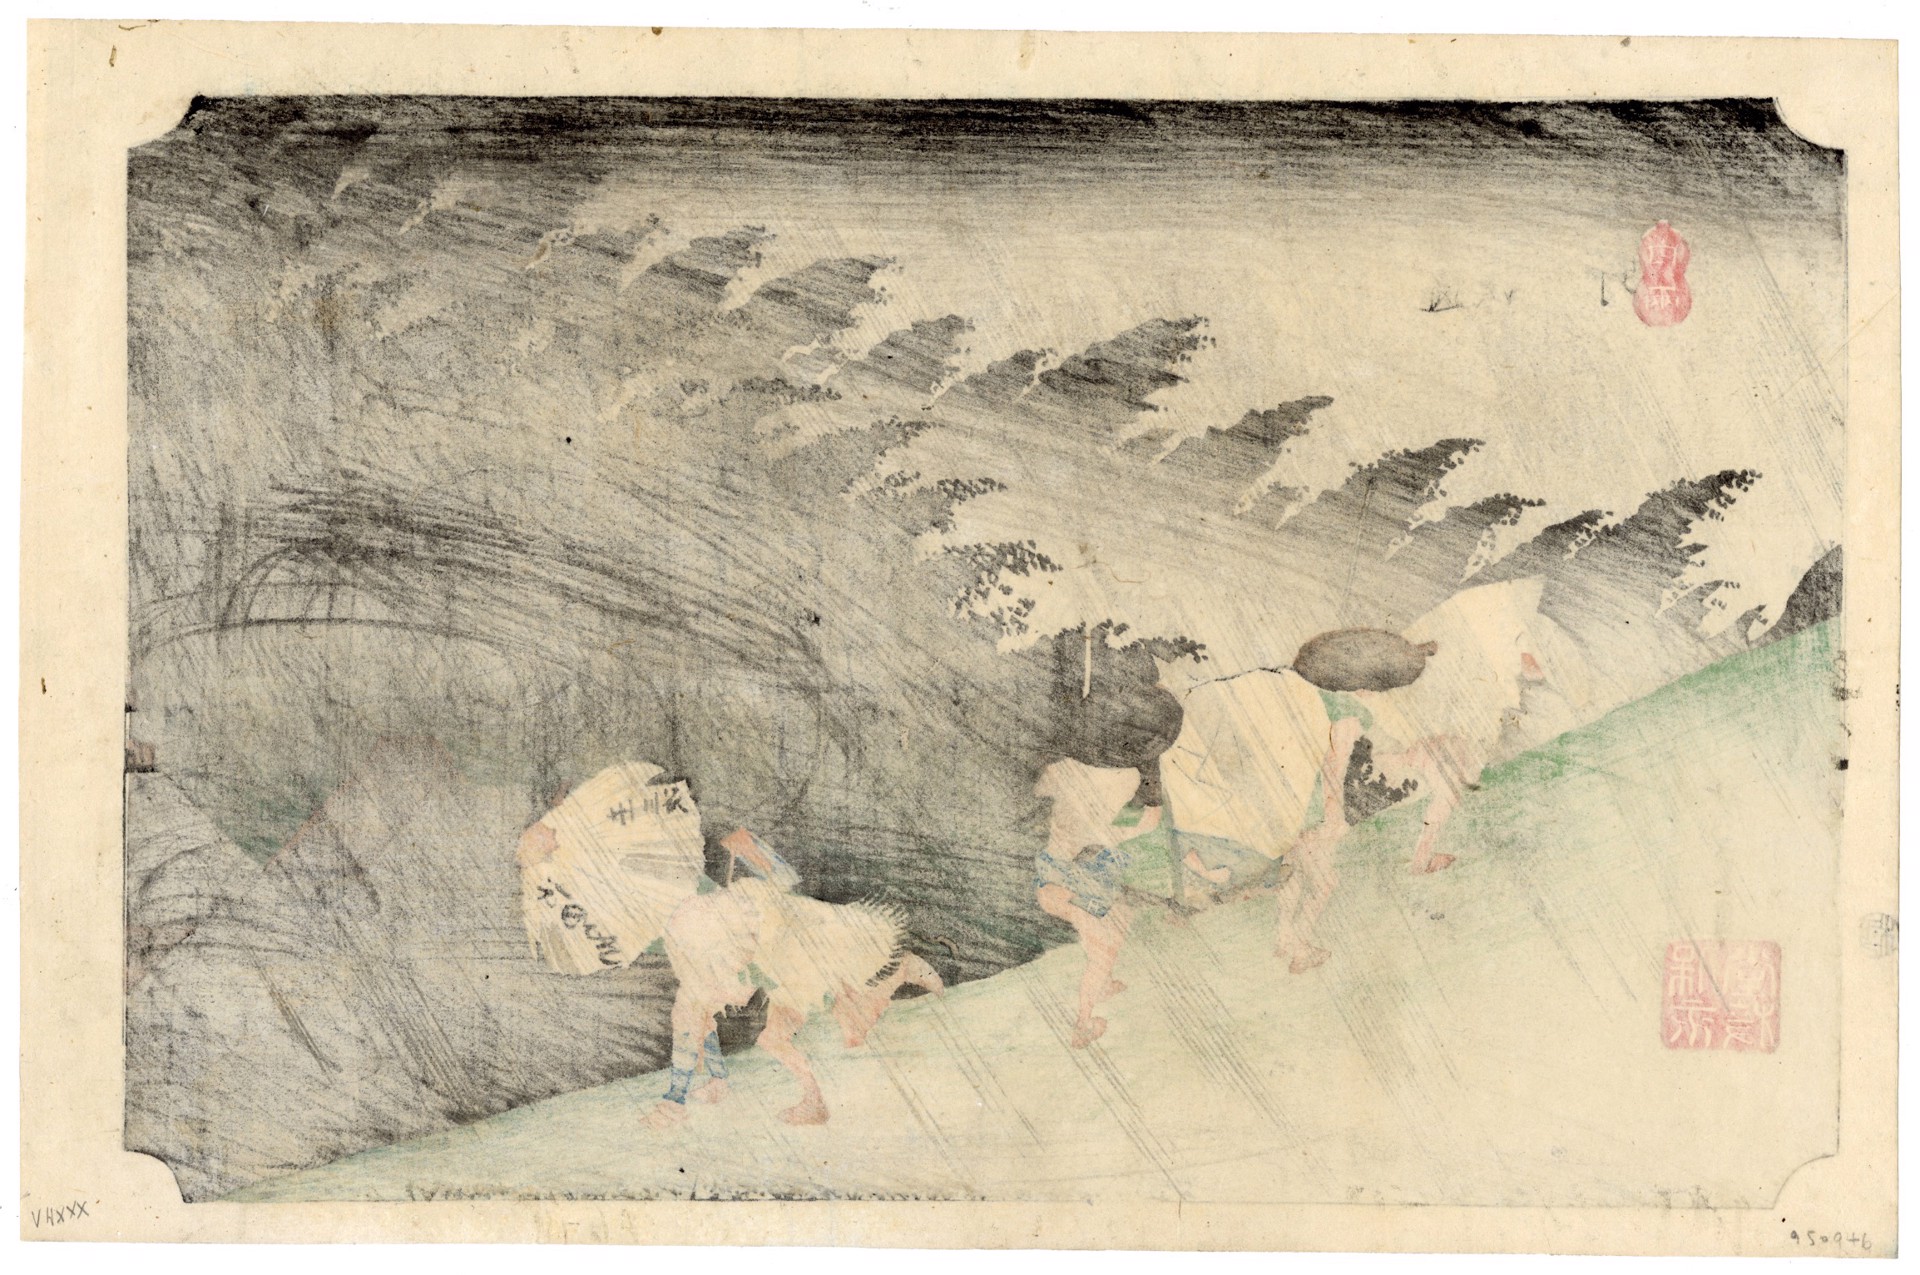 Shono: Driving Rain by Hiroshige